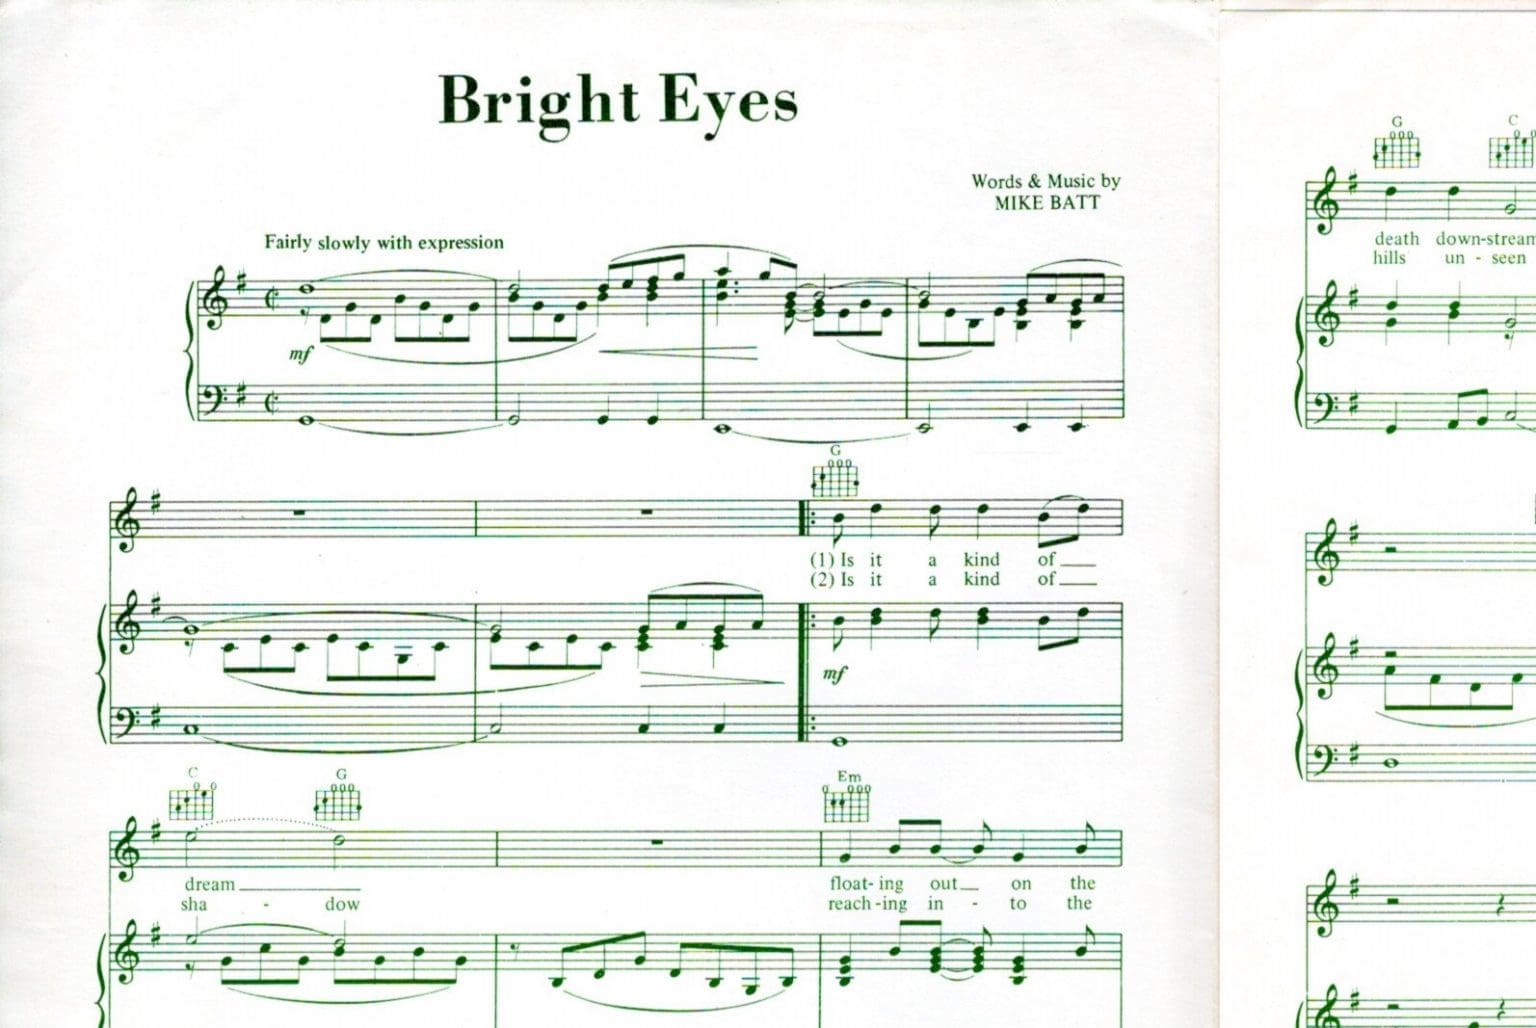 Sheet Music - Bright Eyes (Art Garfunkel) - vinylgroovemusic.com.au